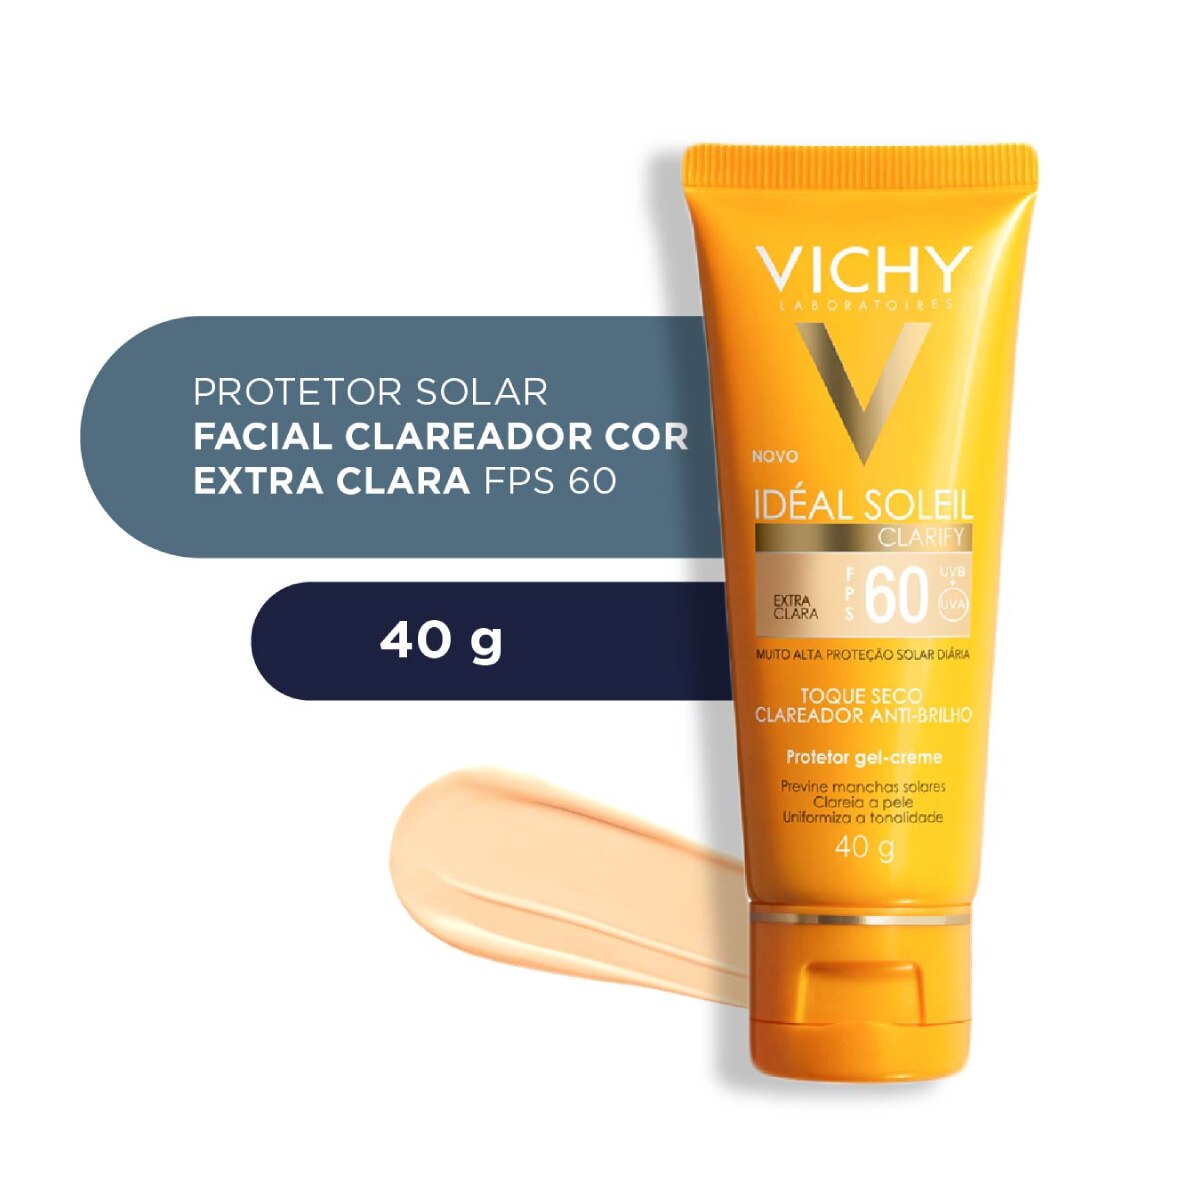 Protetor Solar Facial Vichy Ideal Soleil Clarify FPS60 Extraclara 40g